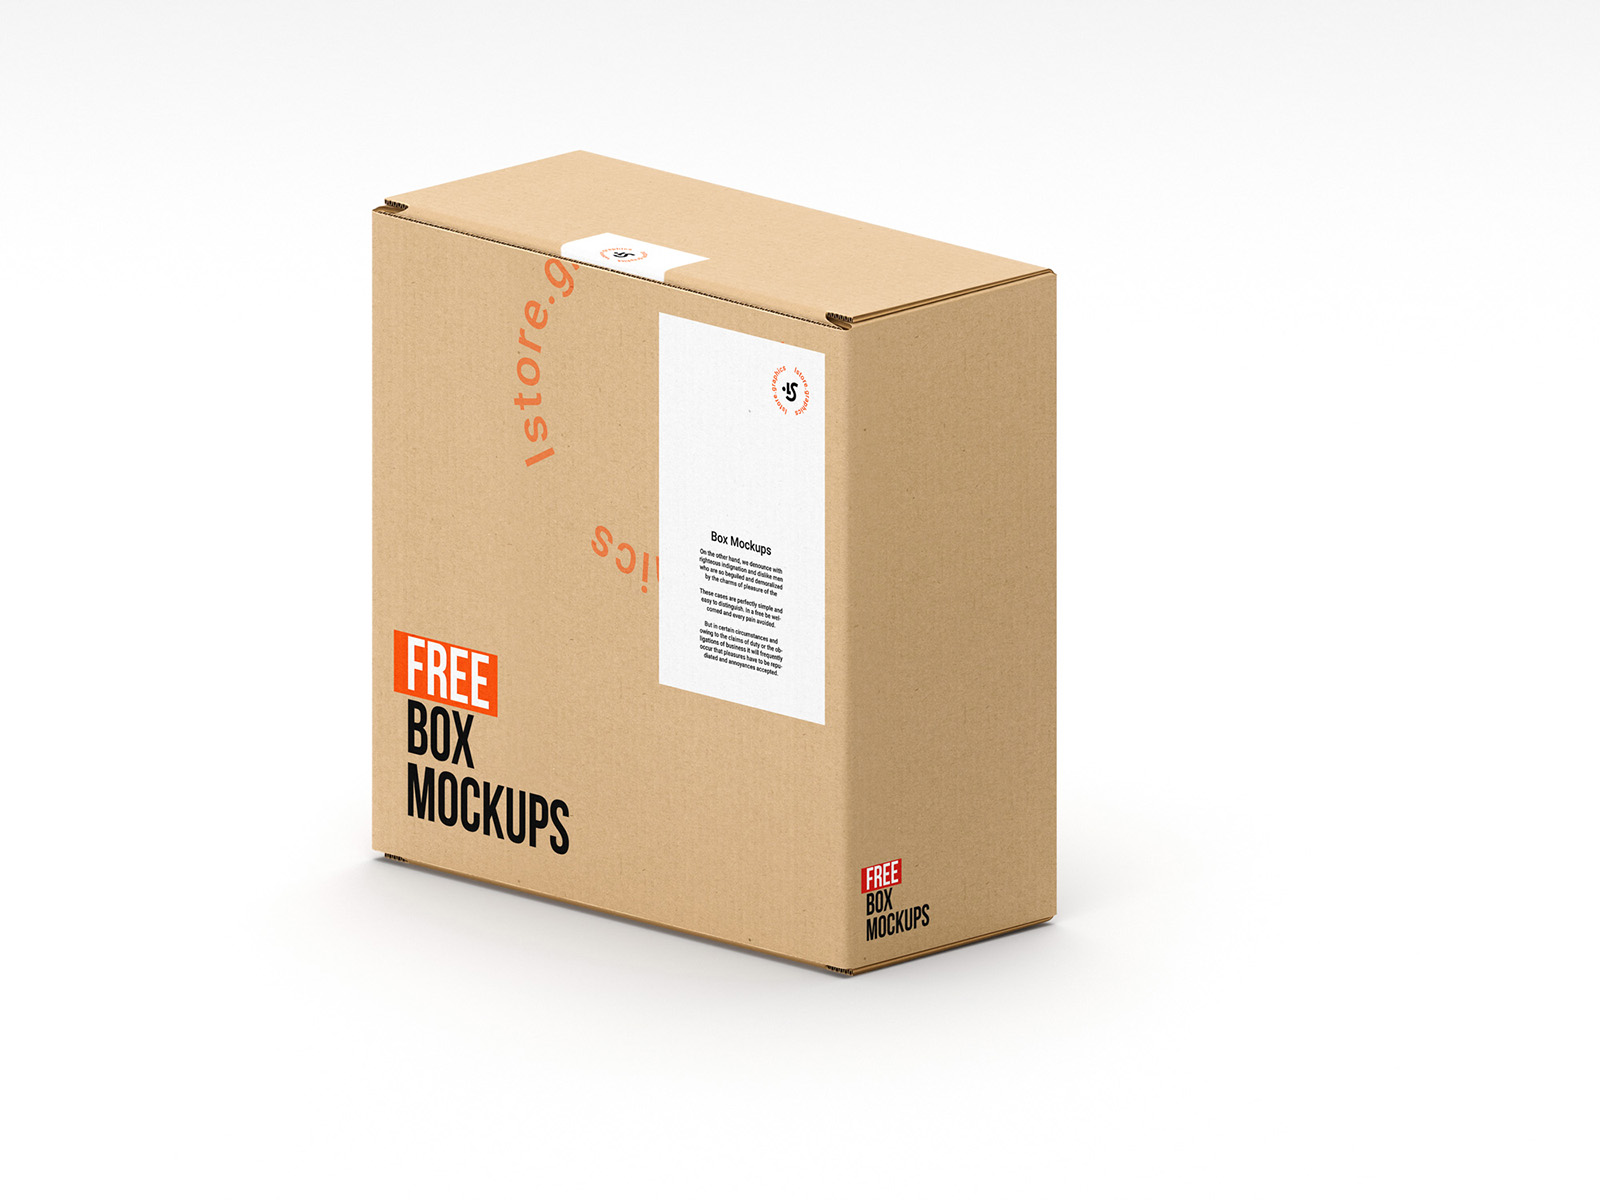 Download 7 Free Box Mockups Photoshop PSD - Best Free Mockups